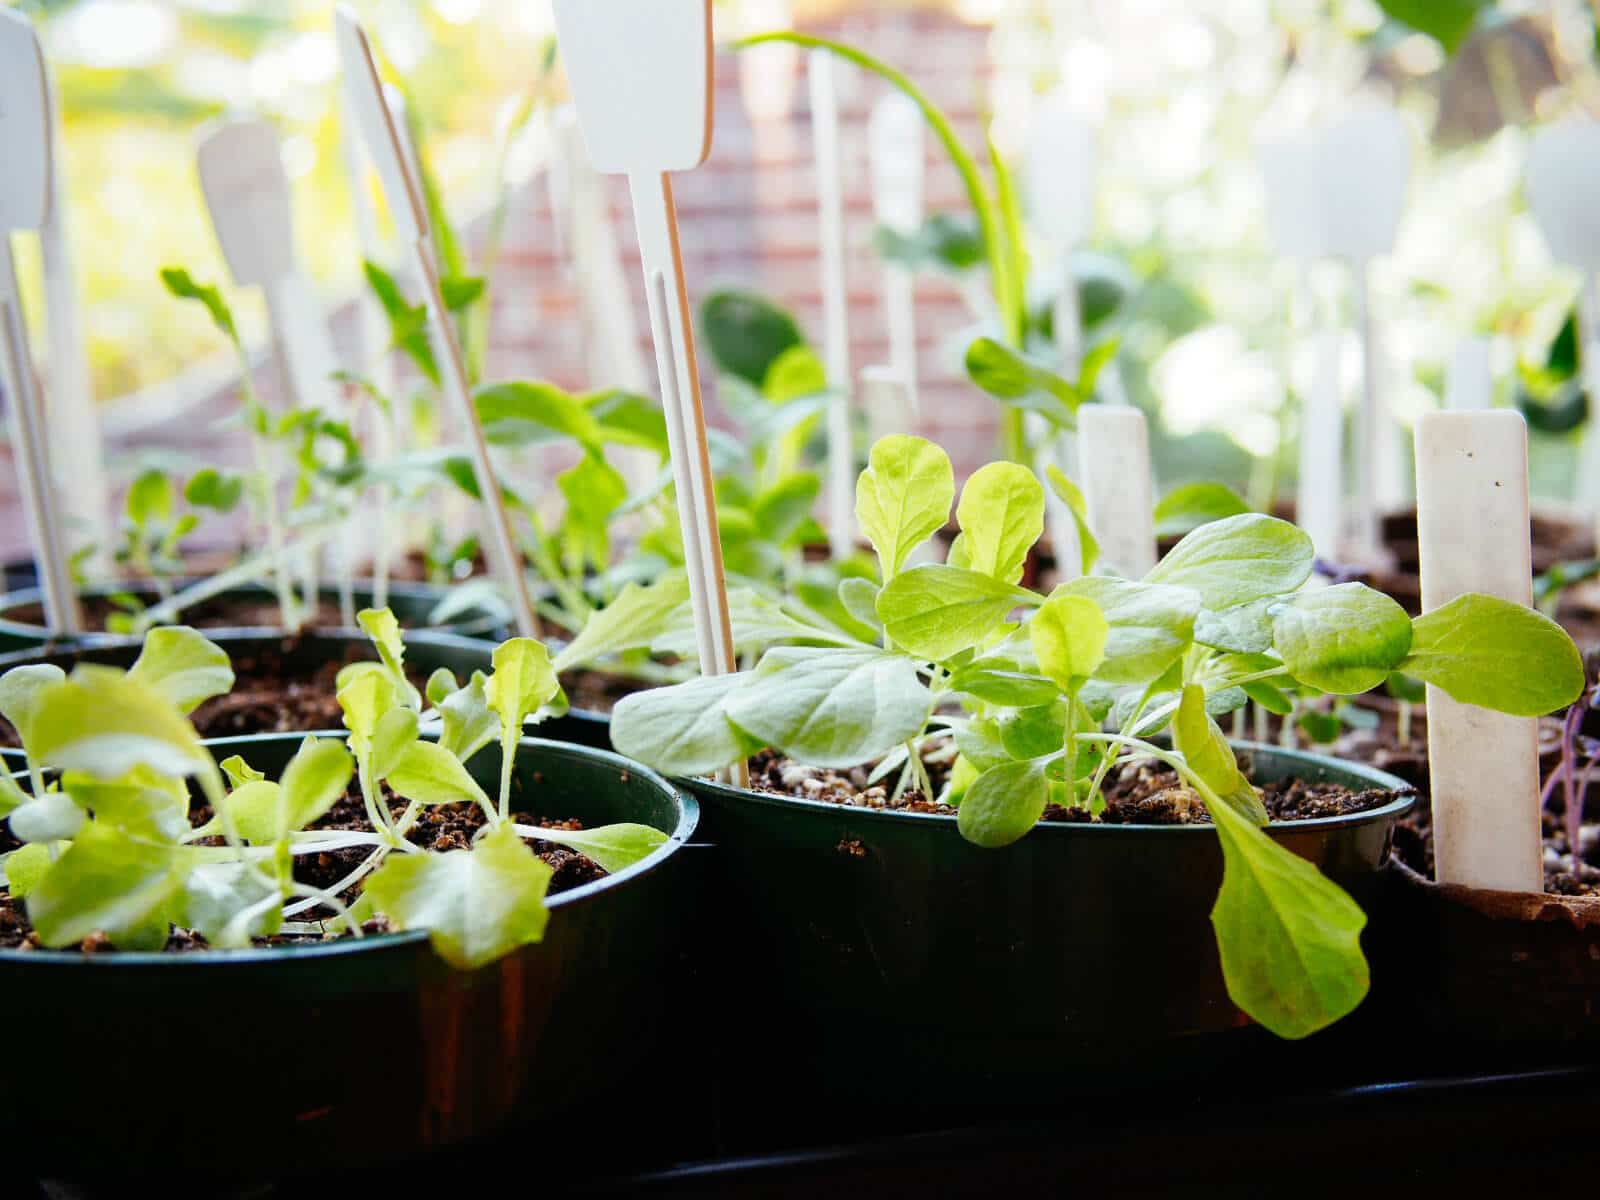 Lettuce seedlings started indoors